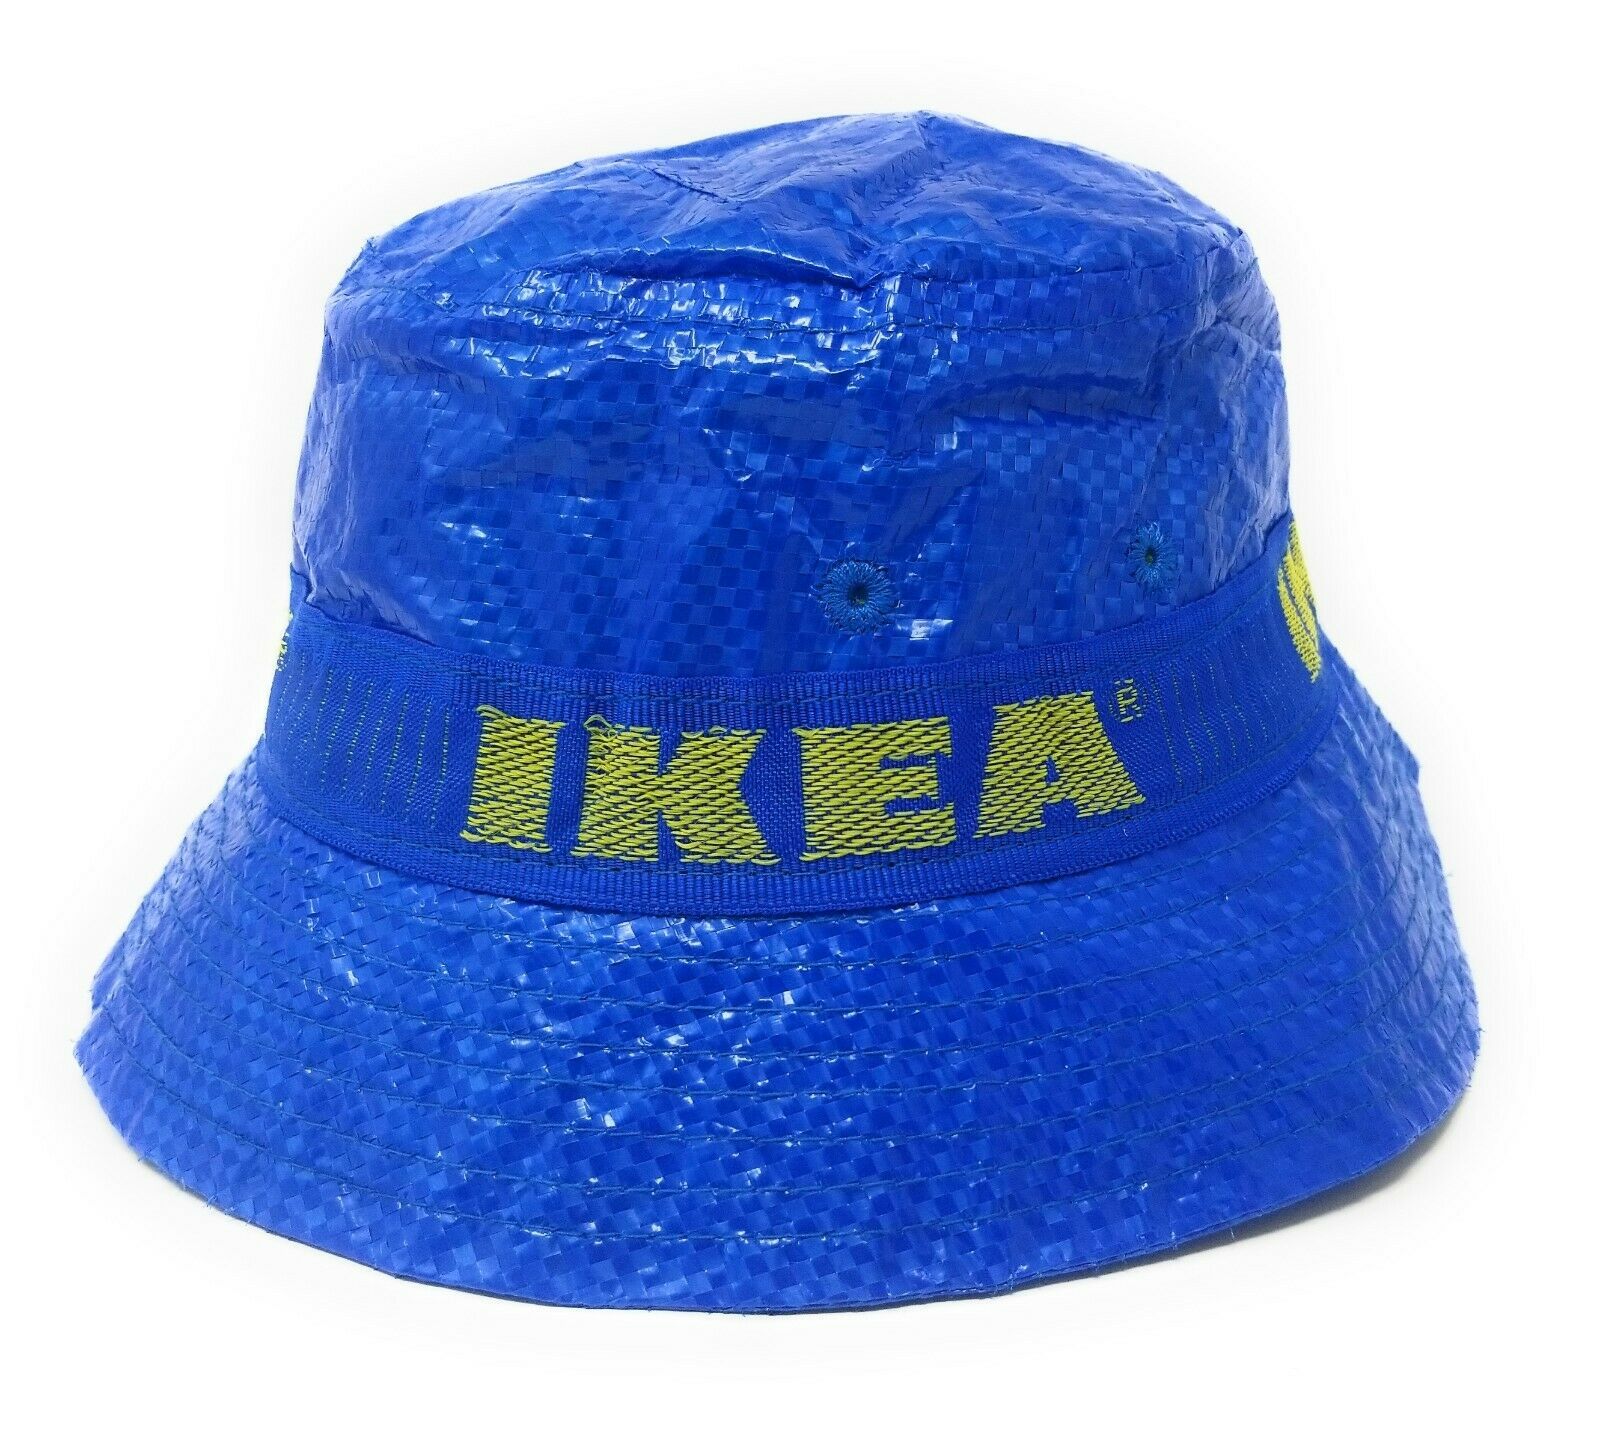 IKEA Limited Edition Blue Bucket Hat